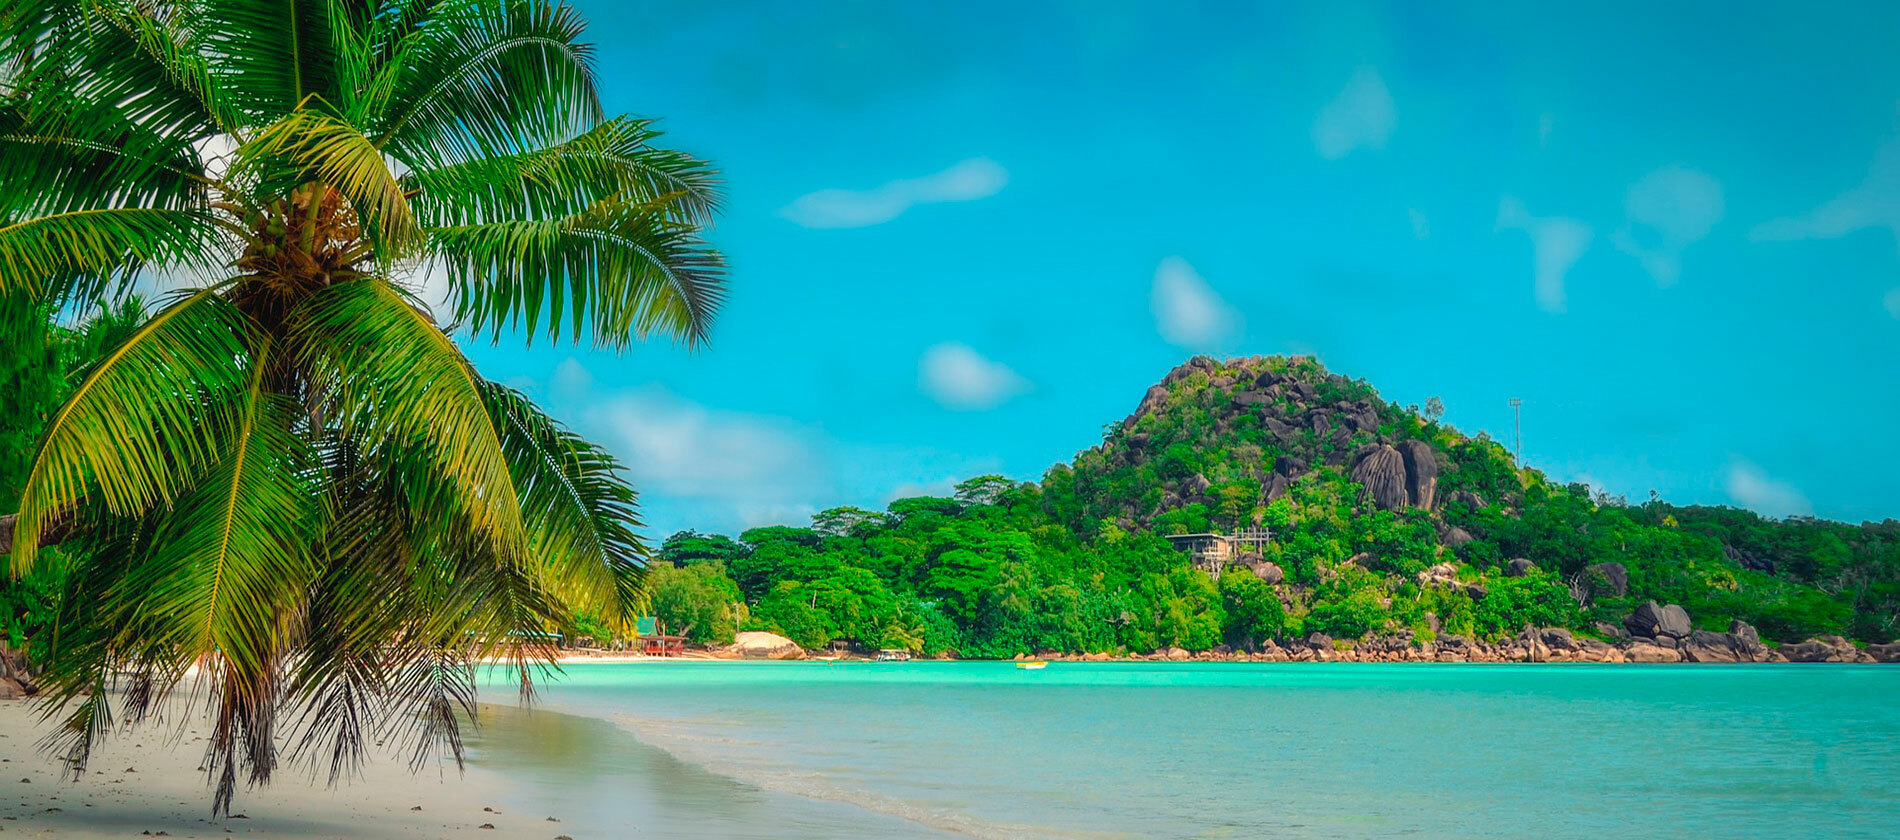 Seychelles Desktop